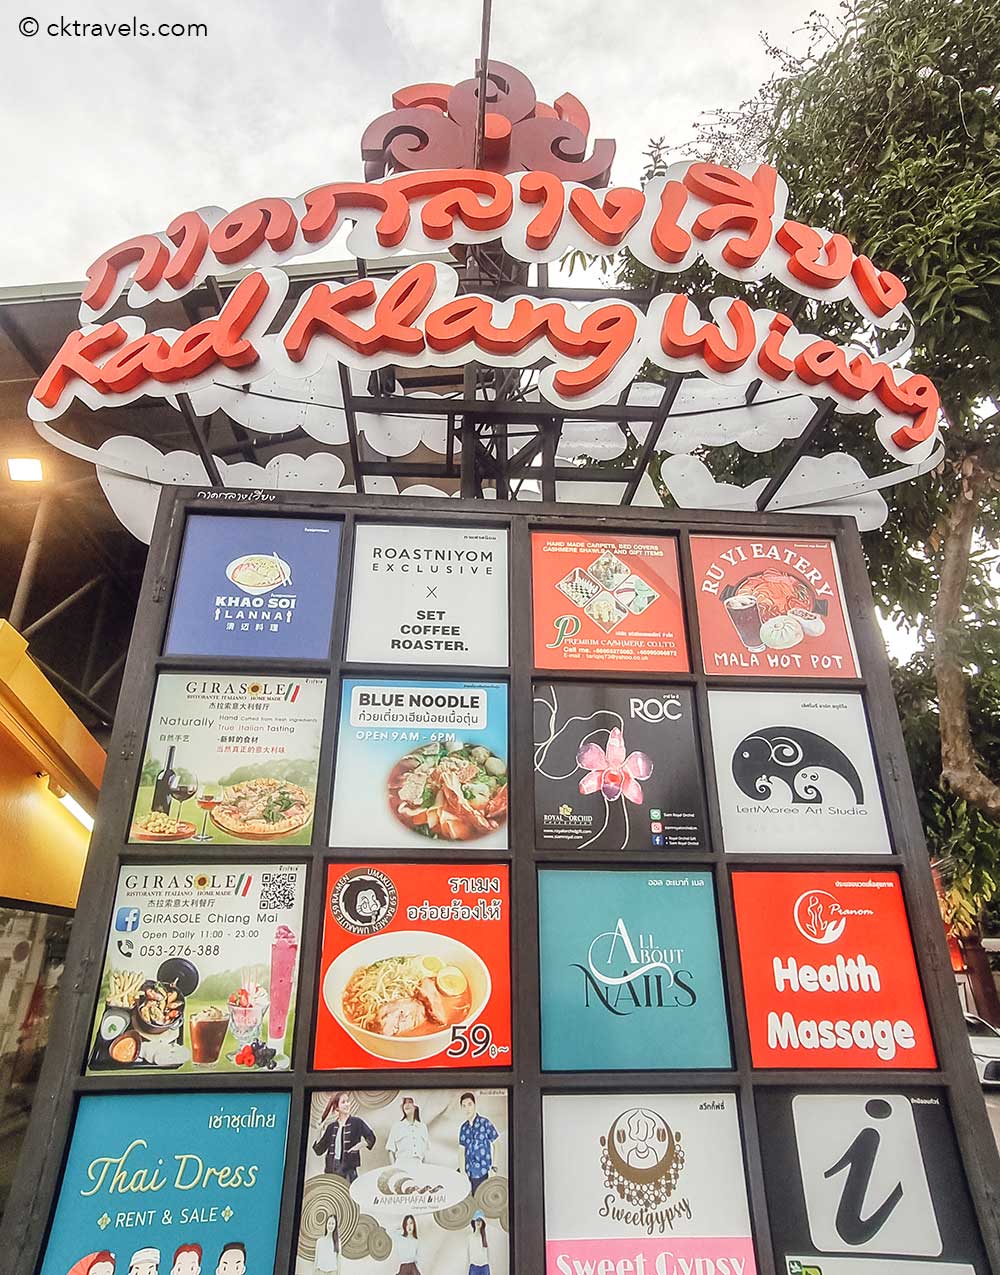 Kad Klang Wiang Outdoor Shopping Plaza Chiang Mai